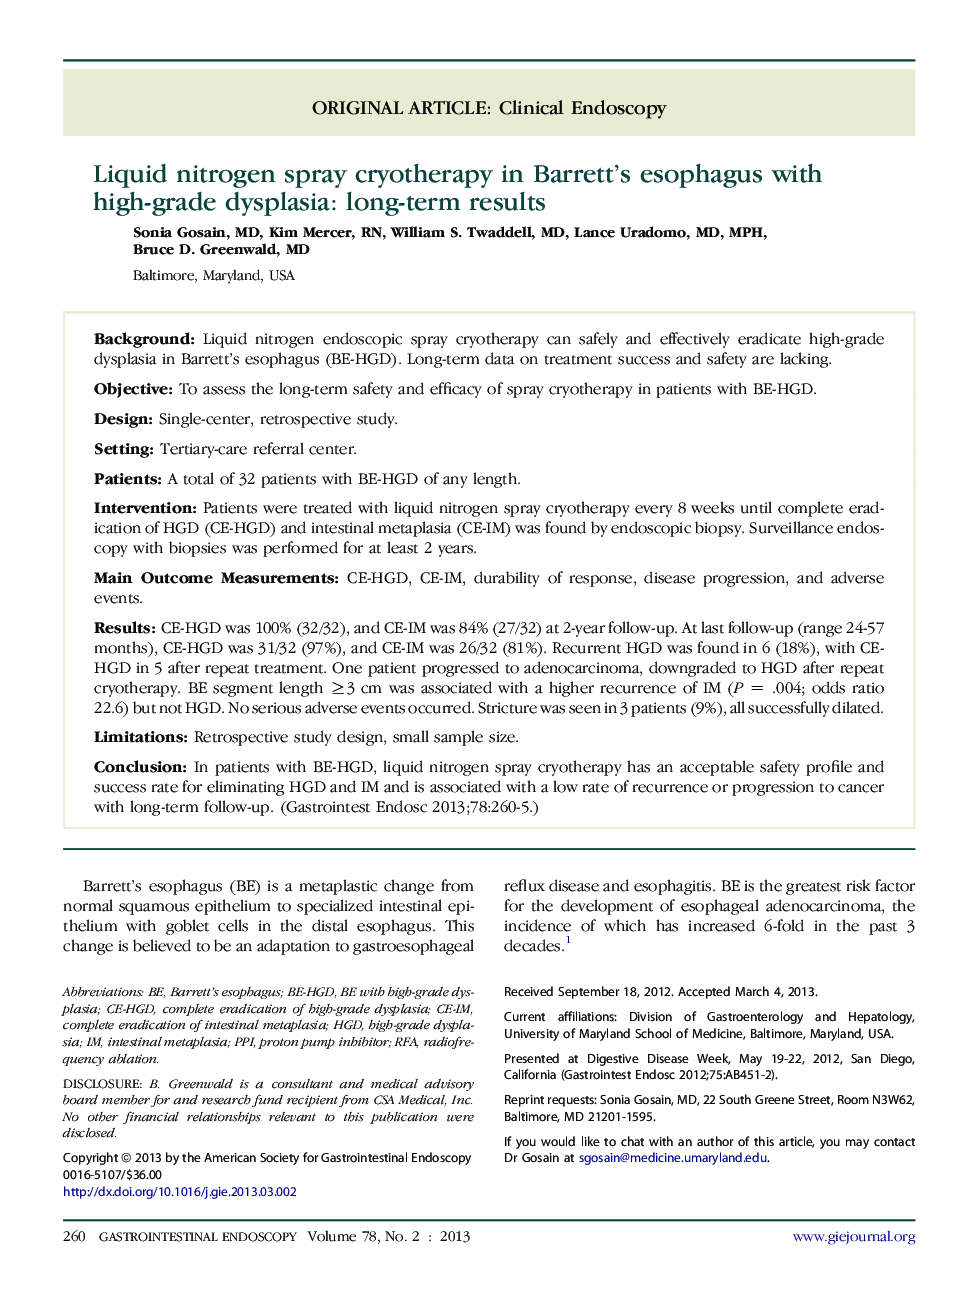 Liquid nitrogen spray cryotherapy in Barrett's esophagus with high-grade dysplasia: long-term results 